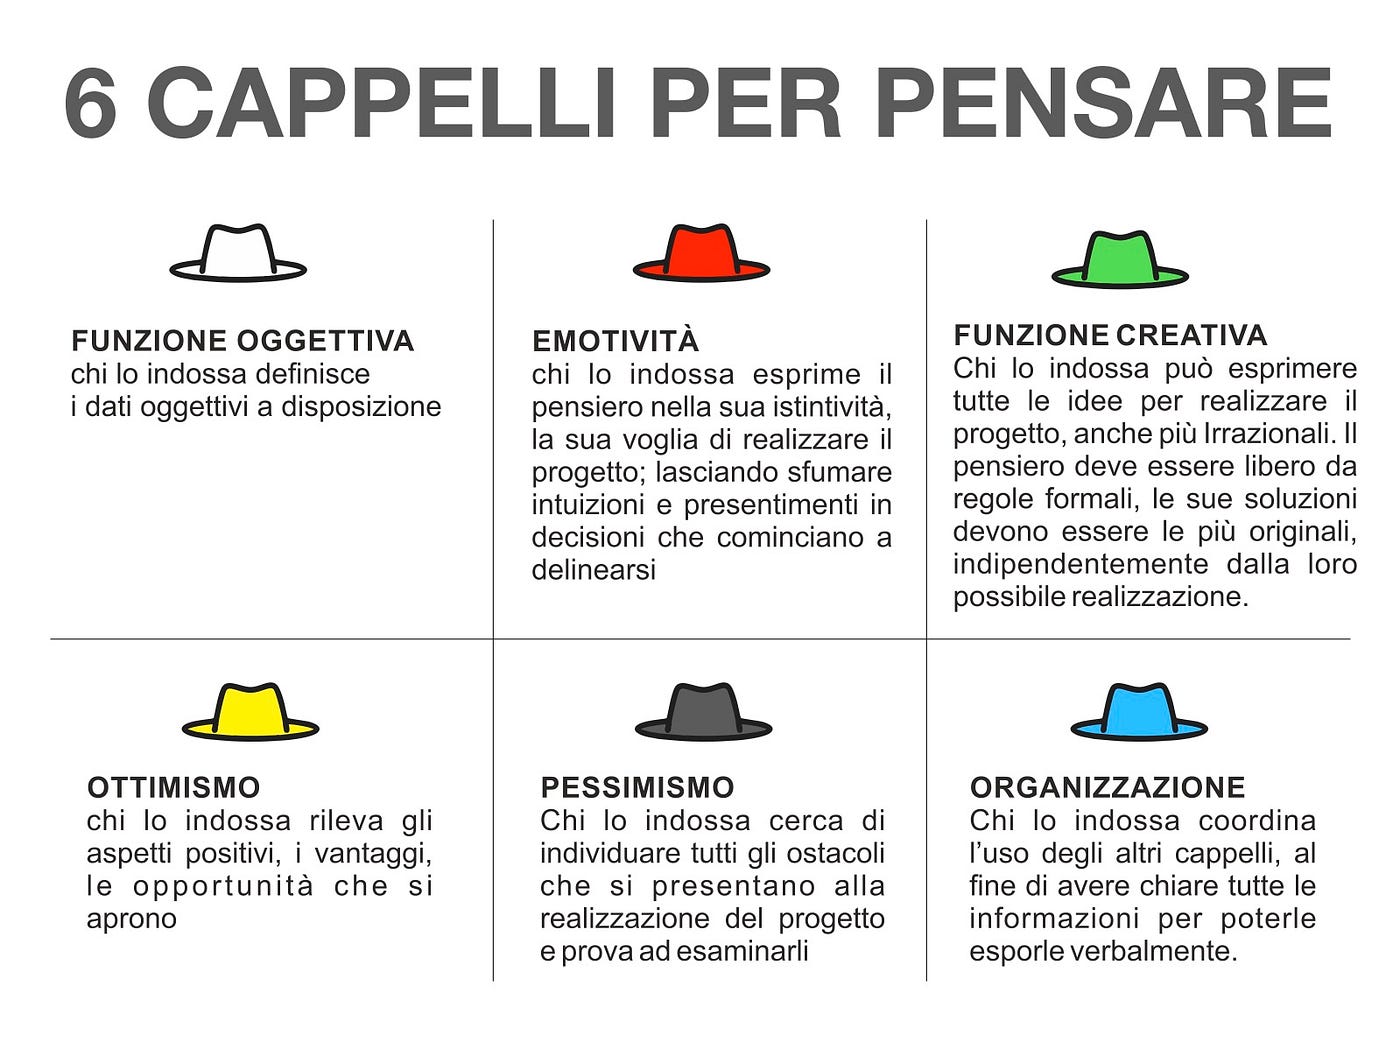 Lateral Thinking — 6 Cappelli per pensare | by Gaetano Guastella | Medium